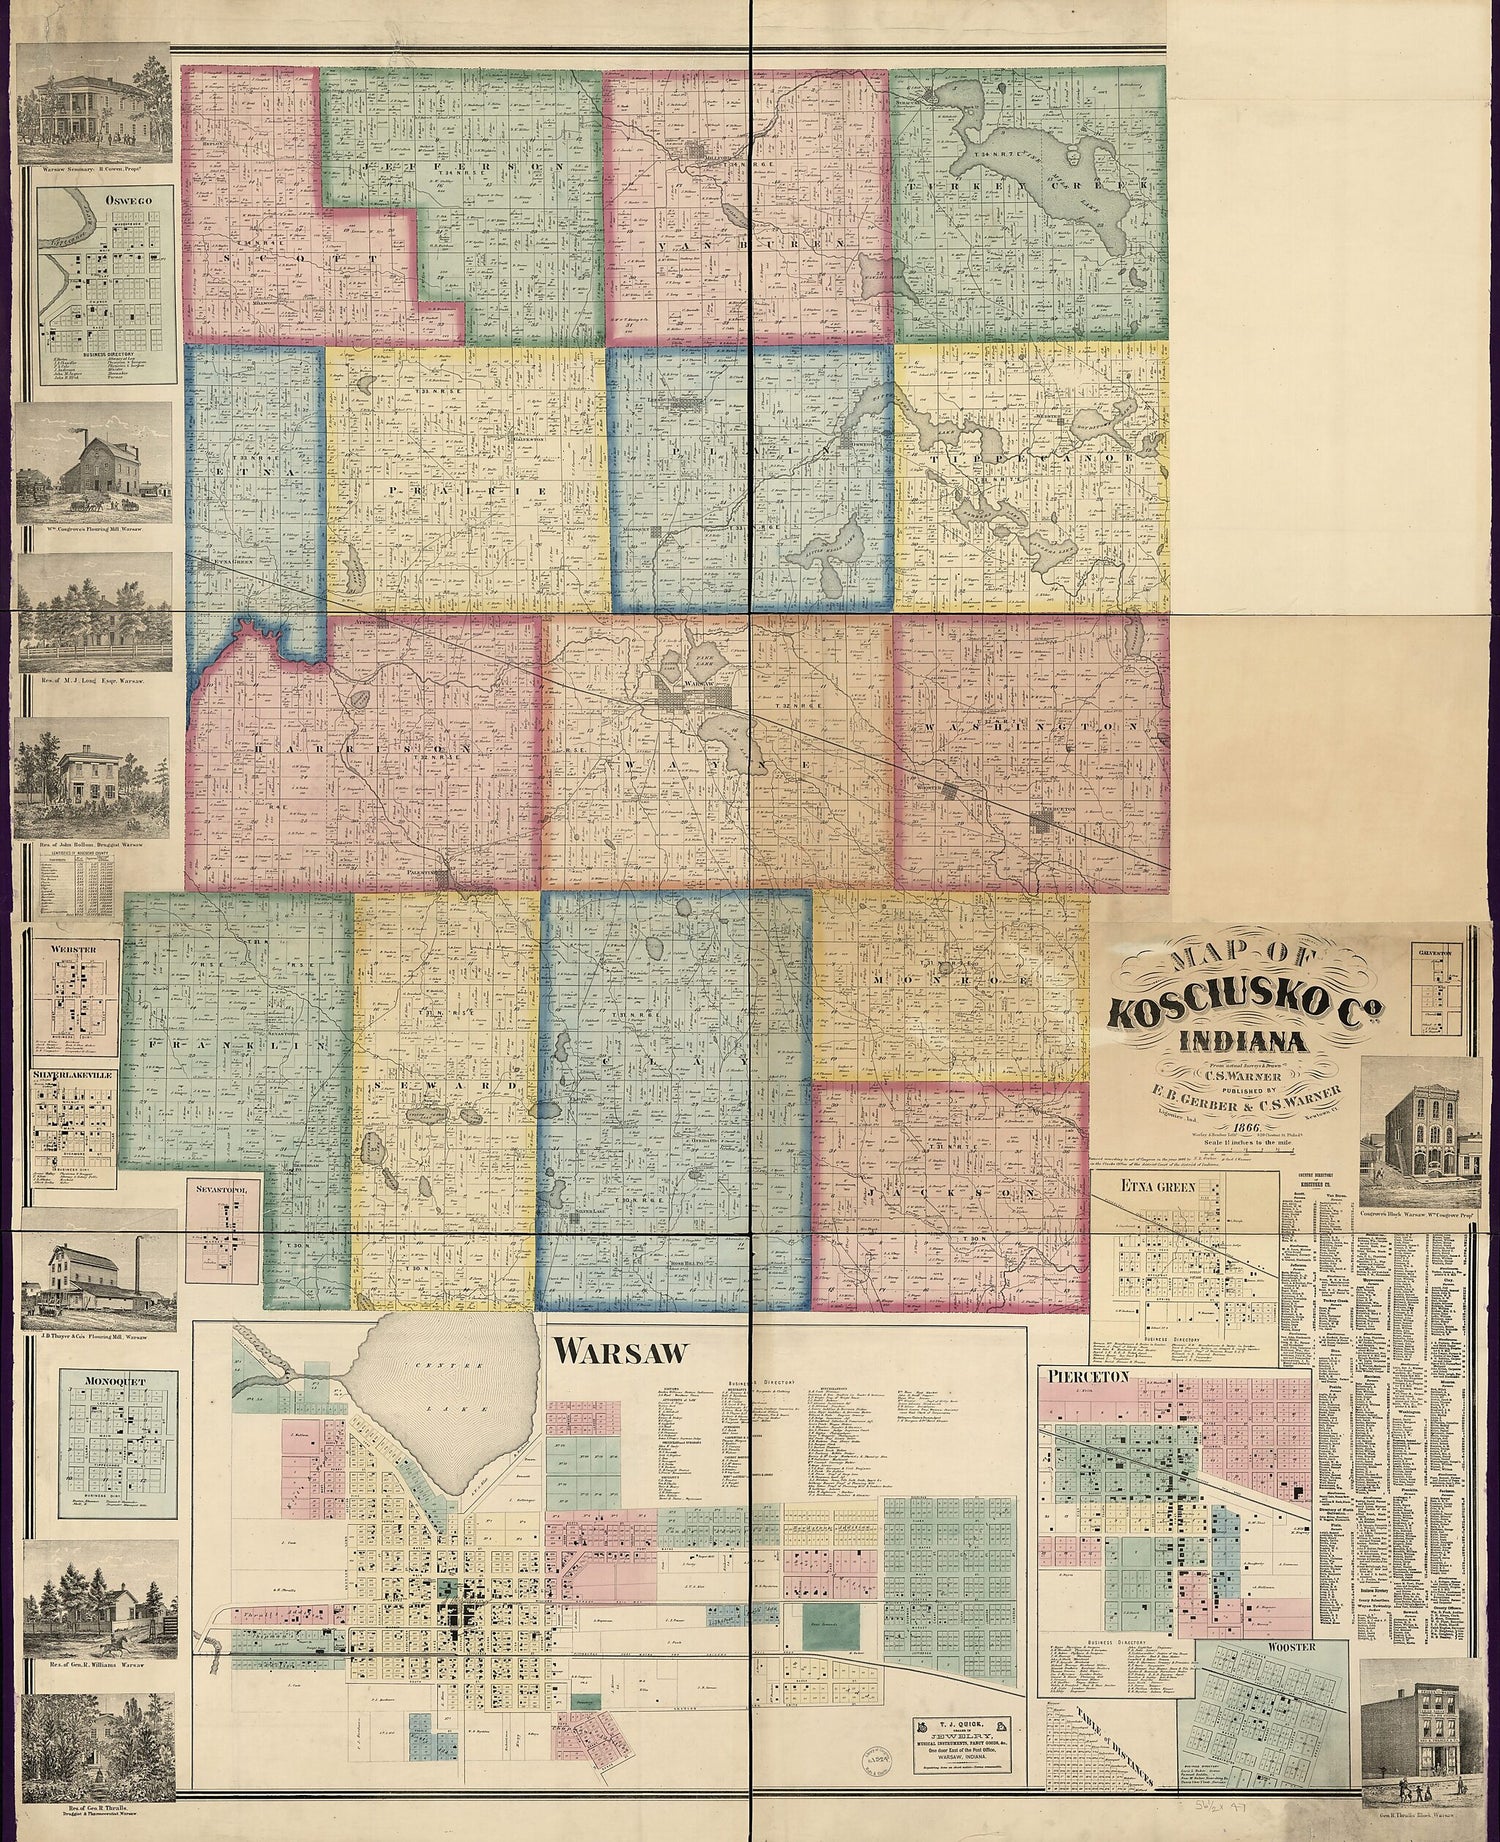 This old map of Map of Kosciusko County, Indiana (Map of Kosciusko County, Indiana) from 1866 was created by C. S. Warner,  Worley &amp; Bracher in 1866